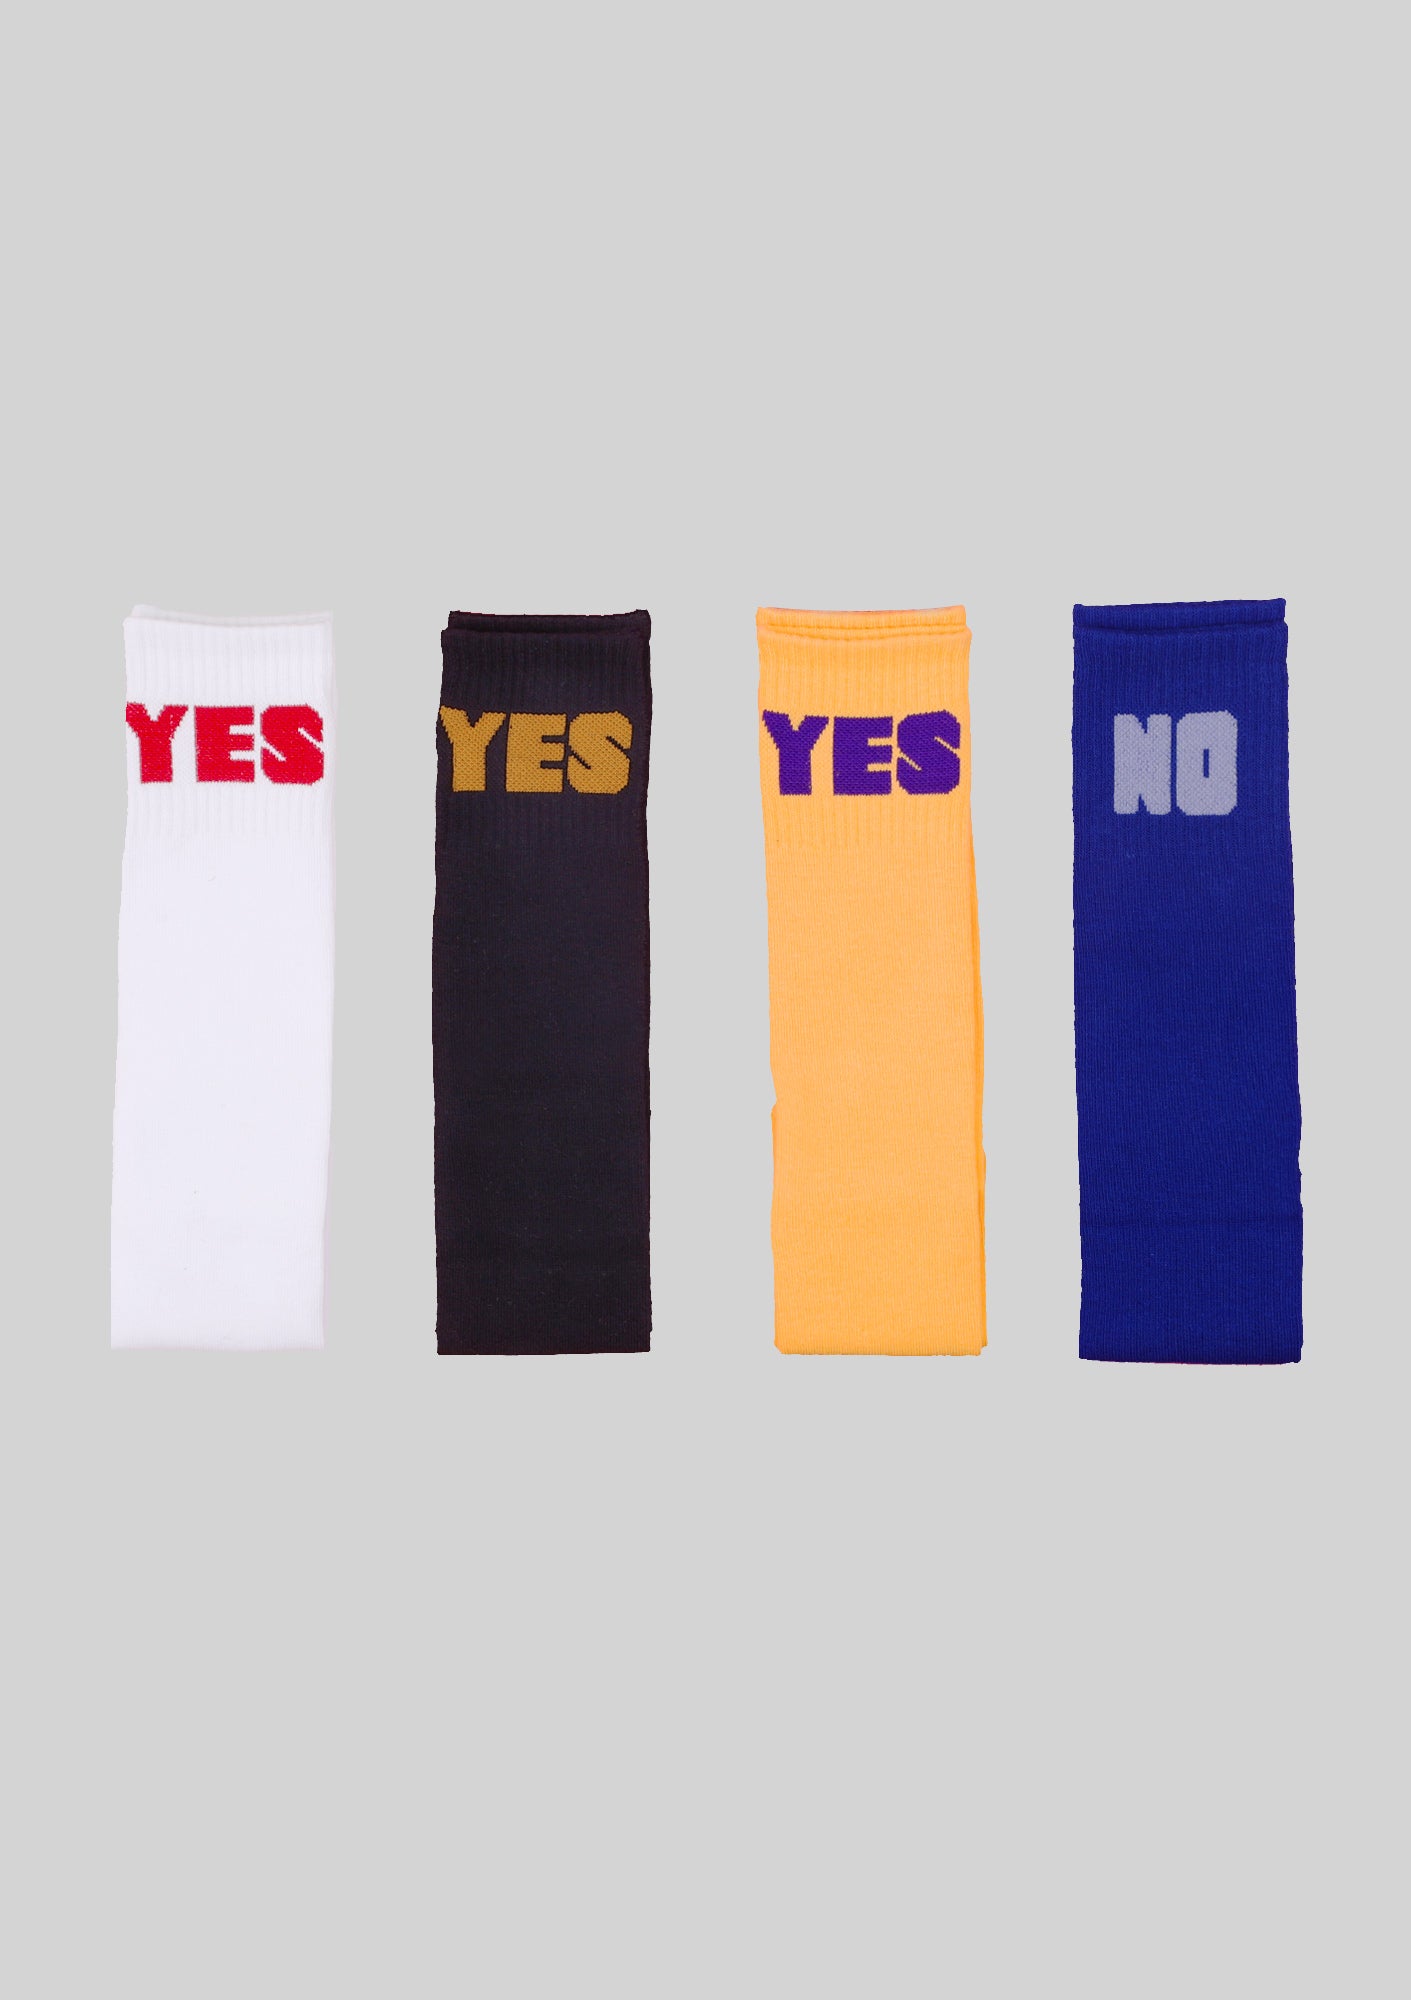 Yes/No Black Socks